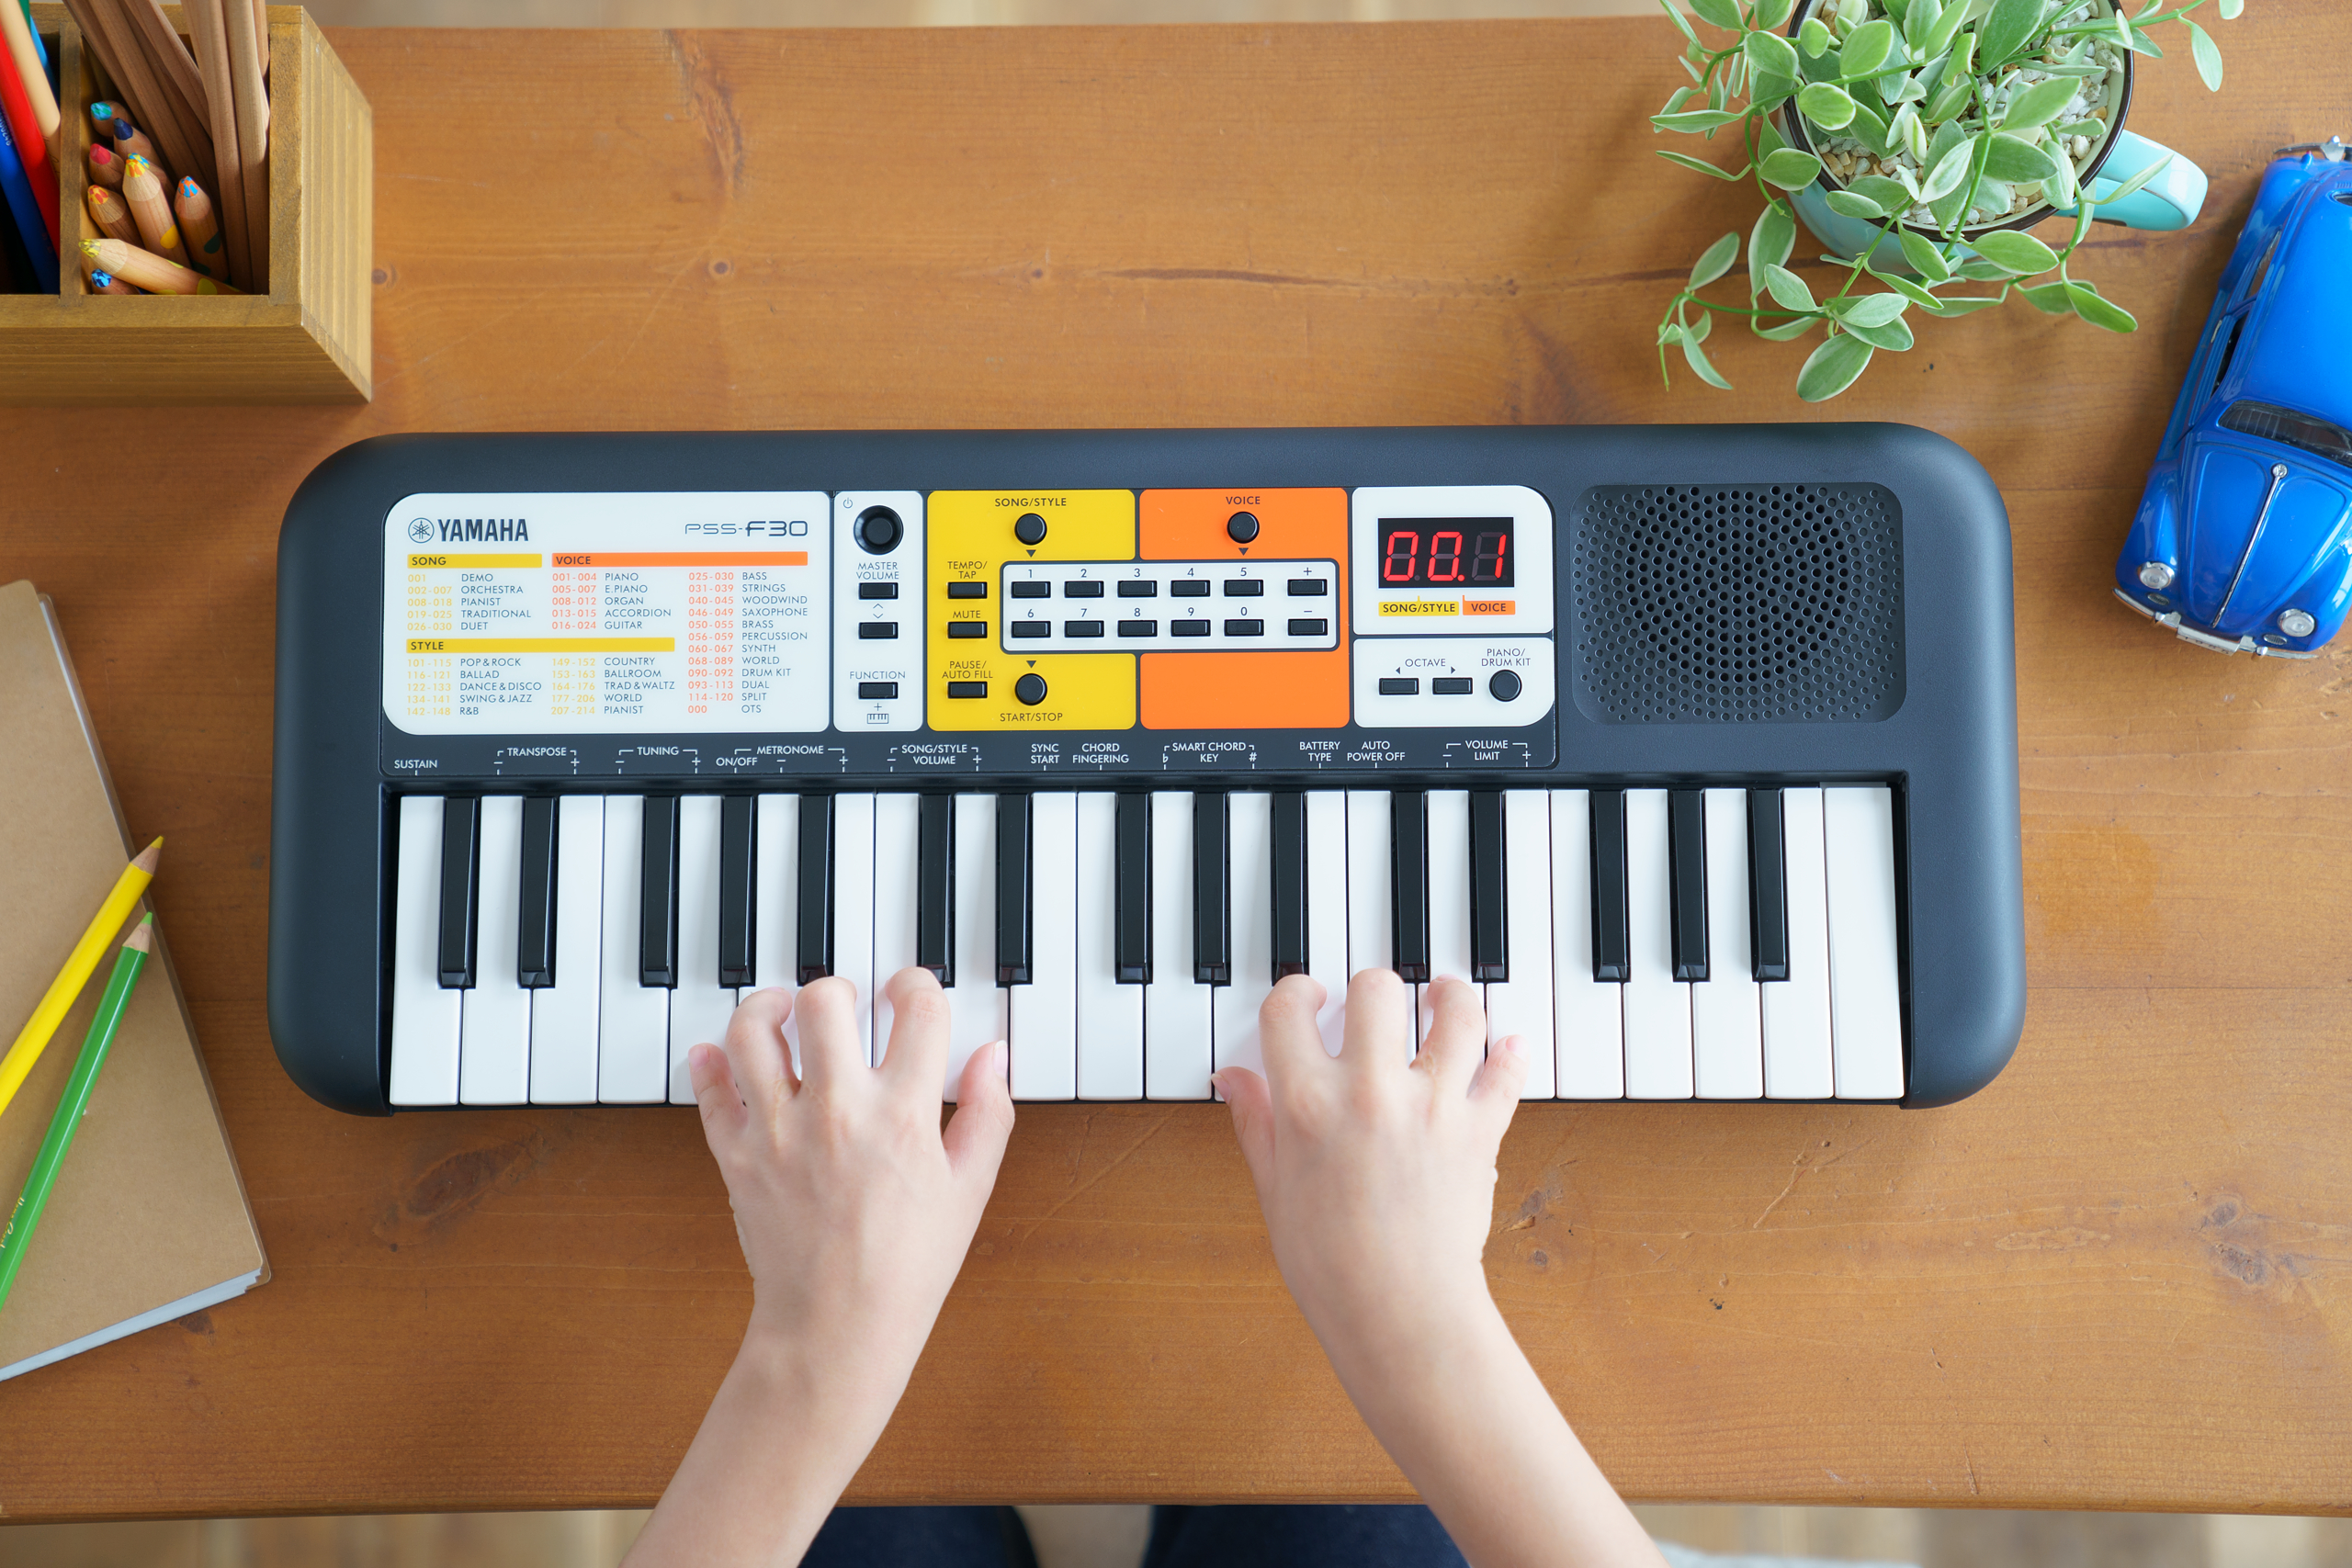 Yamaha Pss-f30 - Entertainer Keyboard - Variation 4